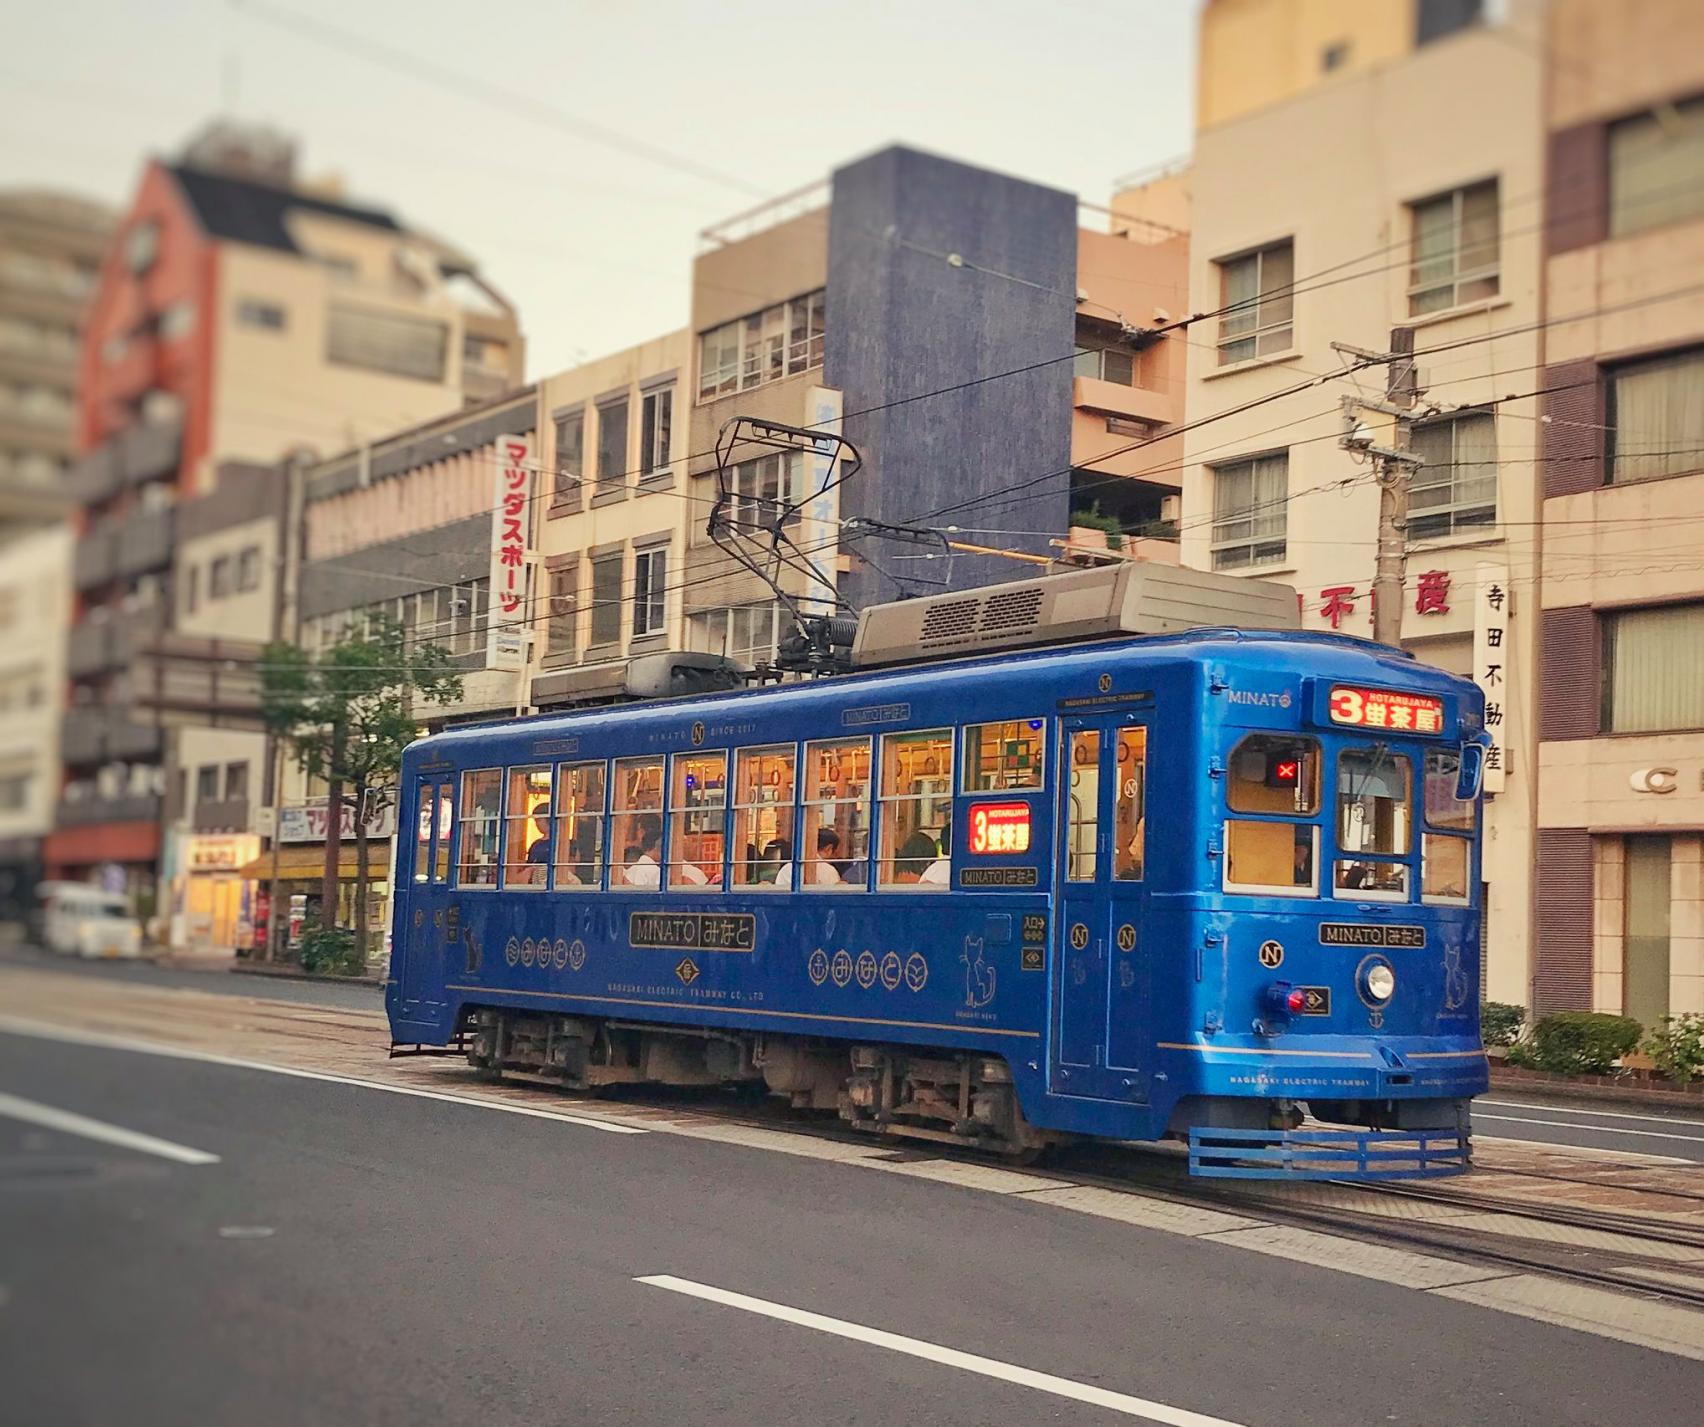 Tram No. 310 – “MINATO”-0